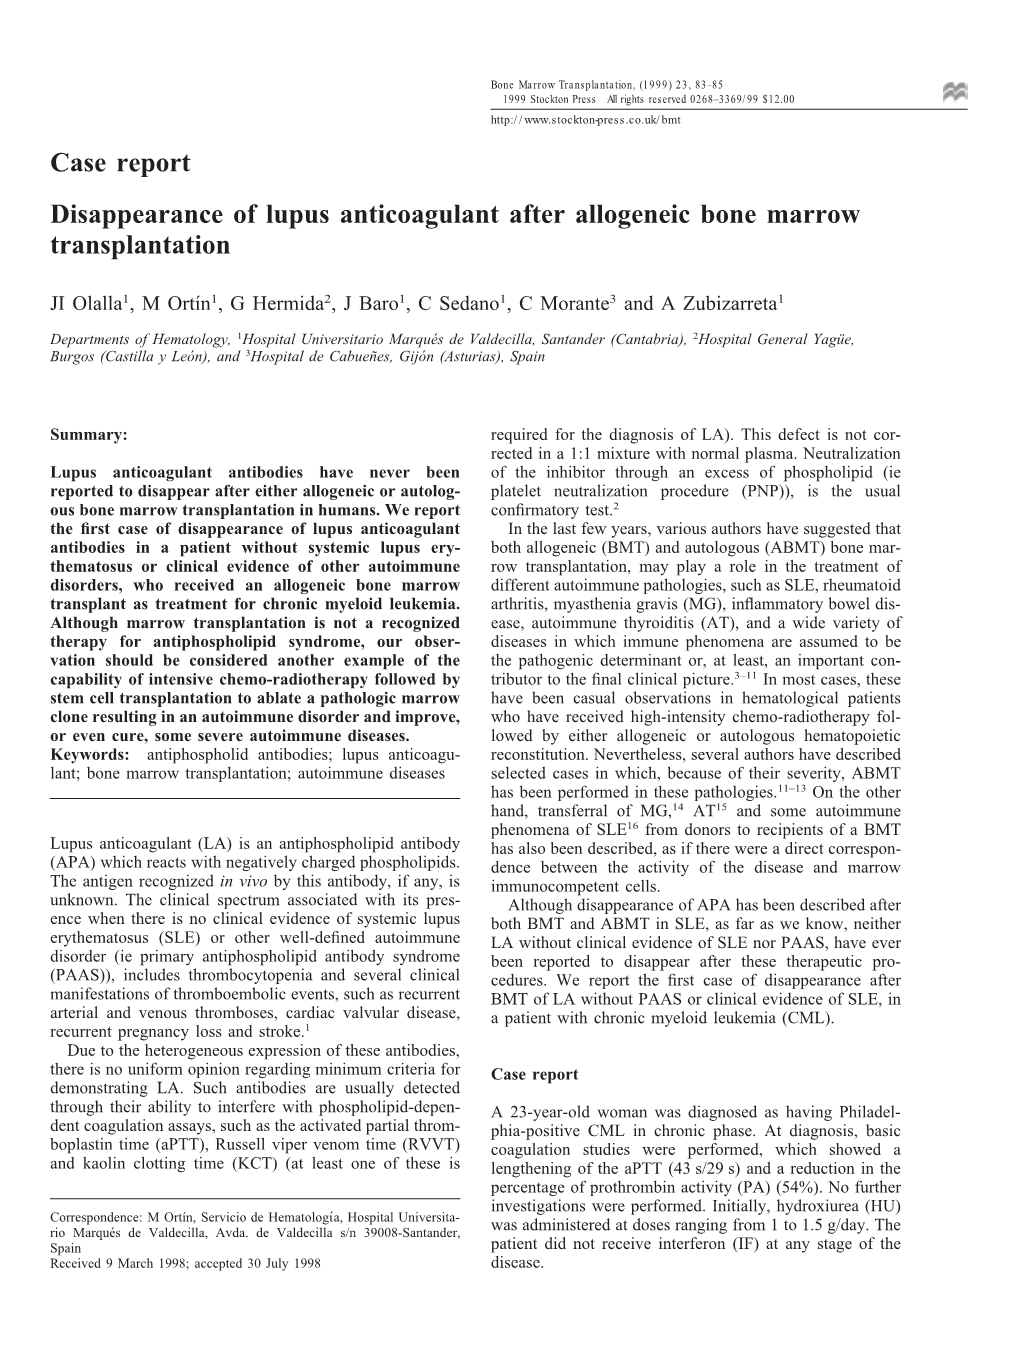 Case Report Disappearance of Lupus Anticoagulant After Allogeneic Bone Marrow Transplantation